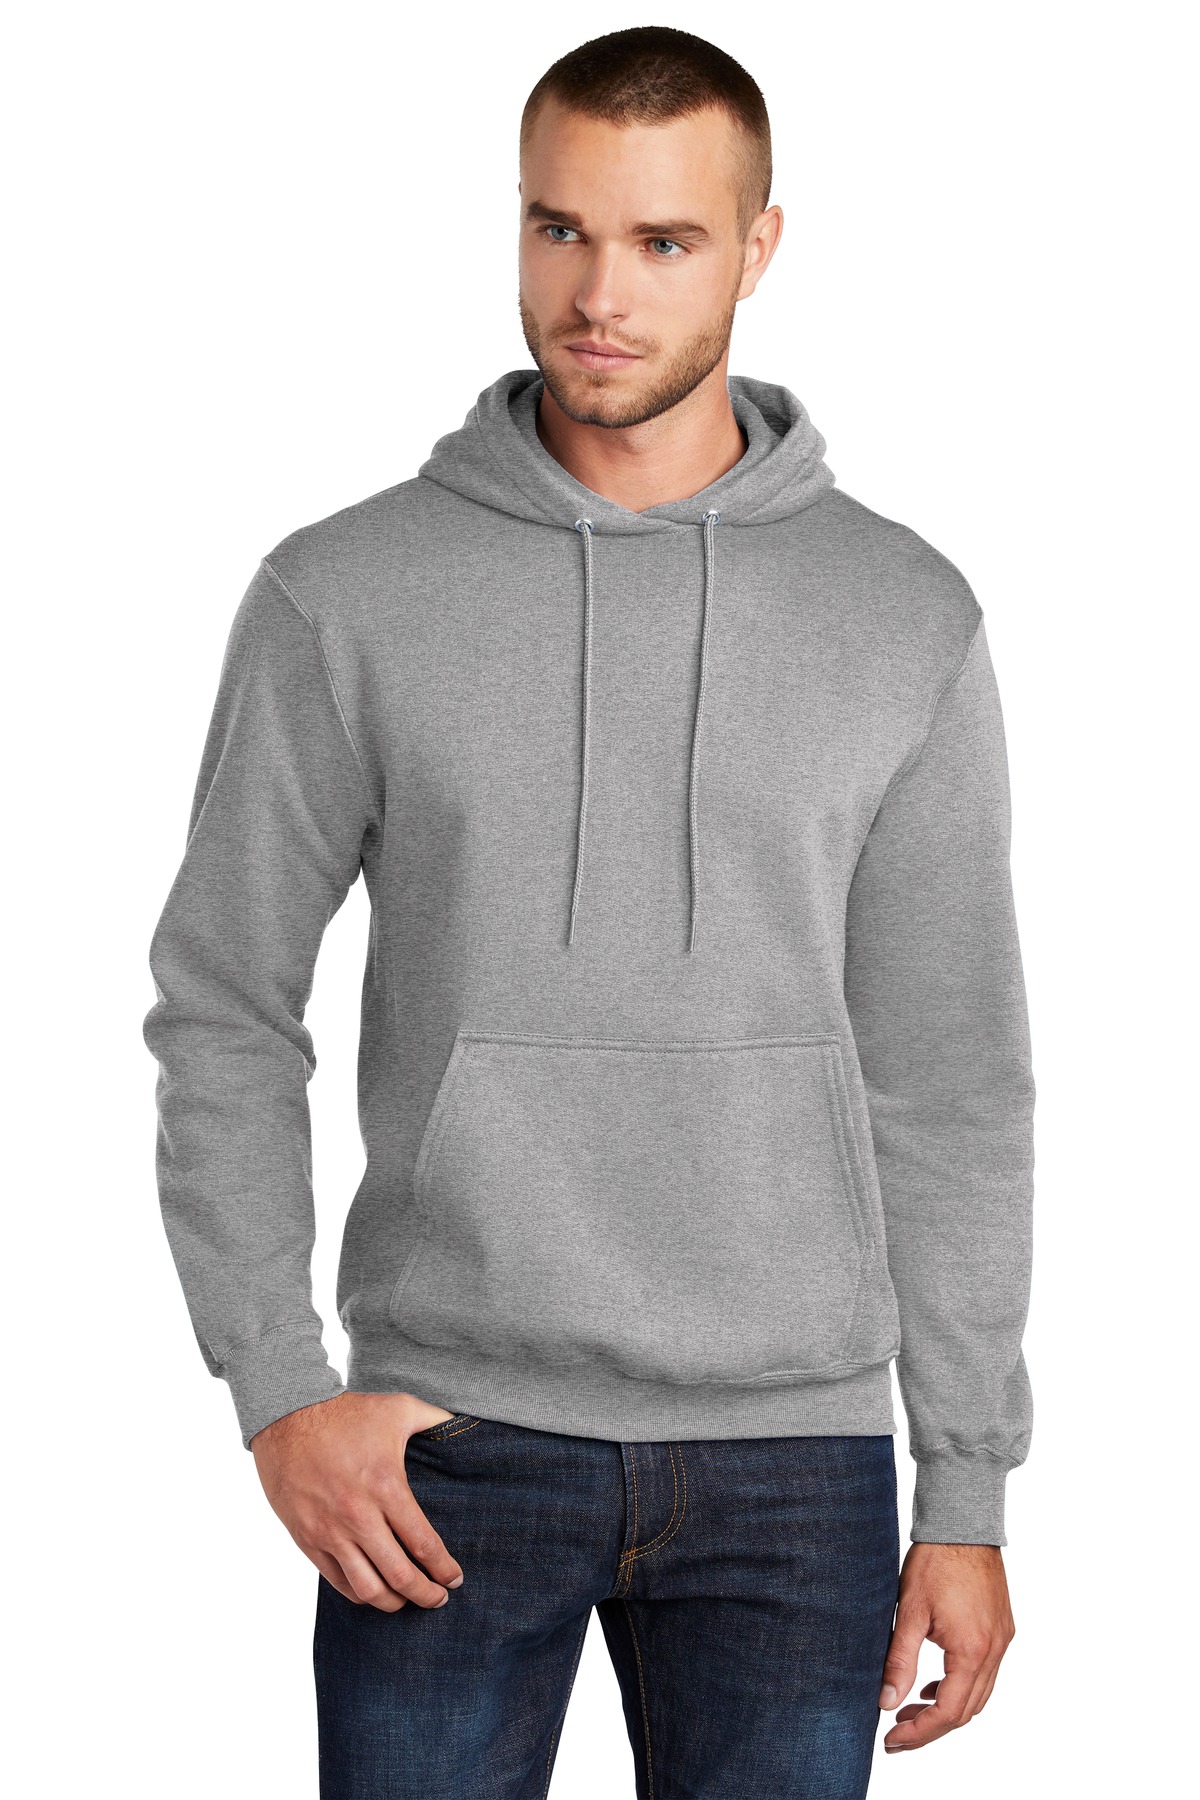 Port & Company Tall Core Fleece Pullover Hooded Sweatshirt PC78HT